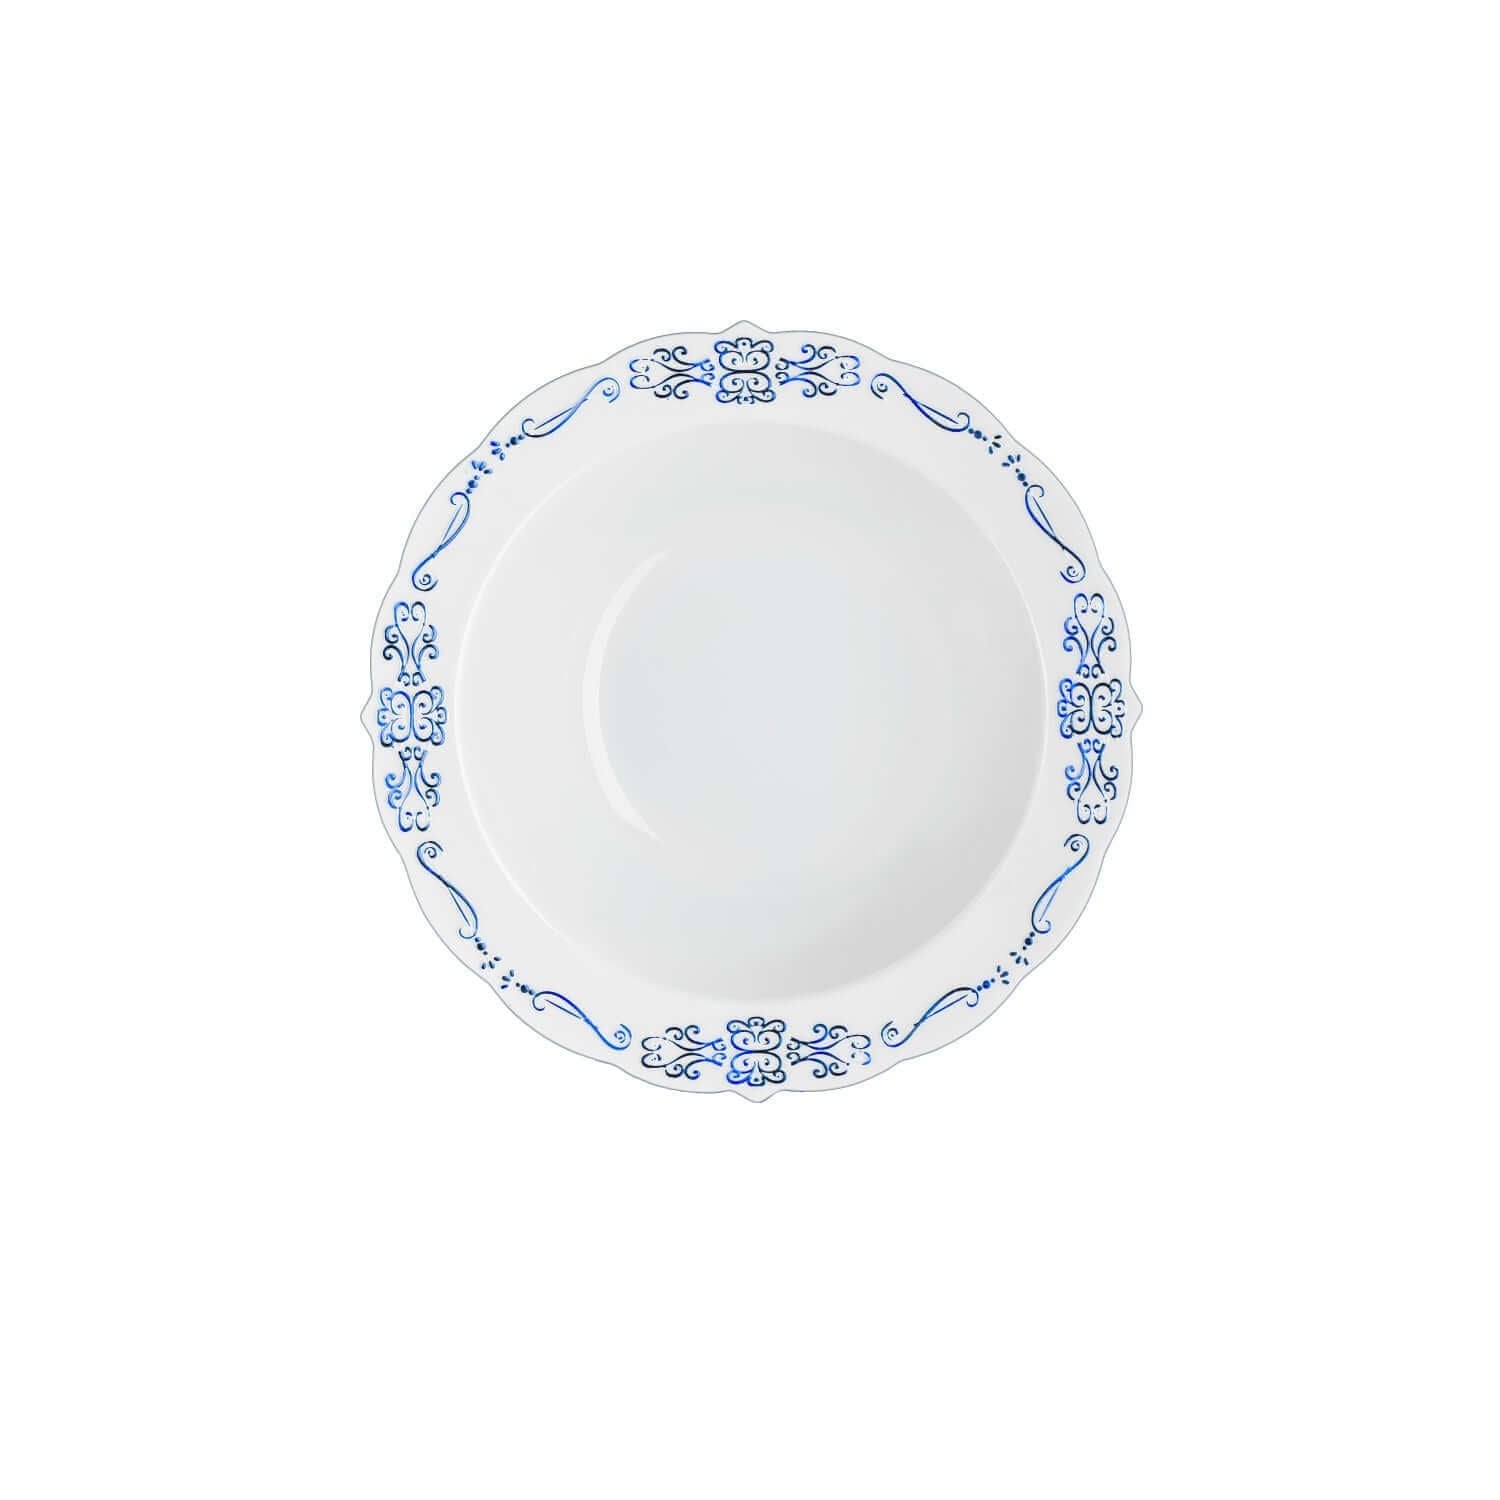 5 oz. White / Navy Victorian Design Plastic Bowls (120 Count) - Yom Tov Settings